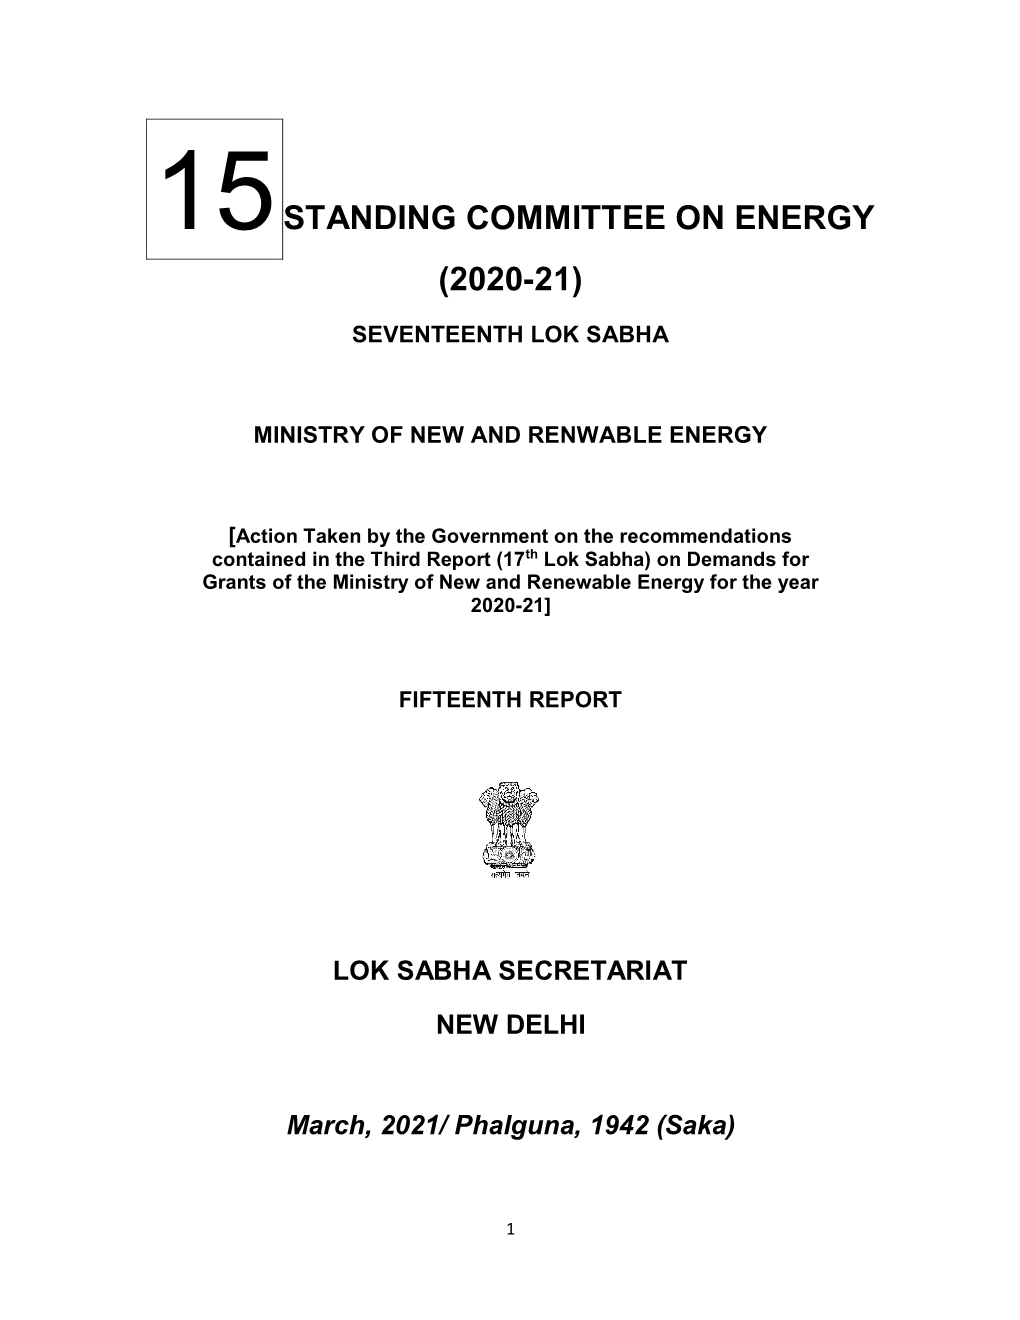 15Standing Committee on Energy (2020-21)